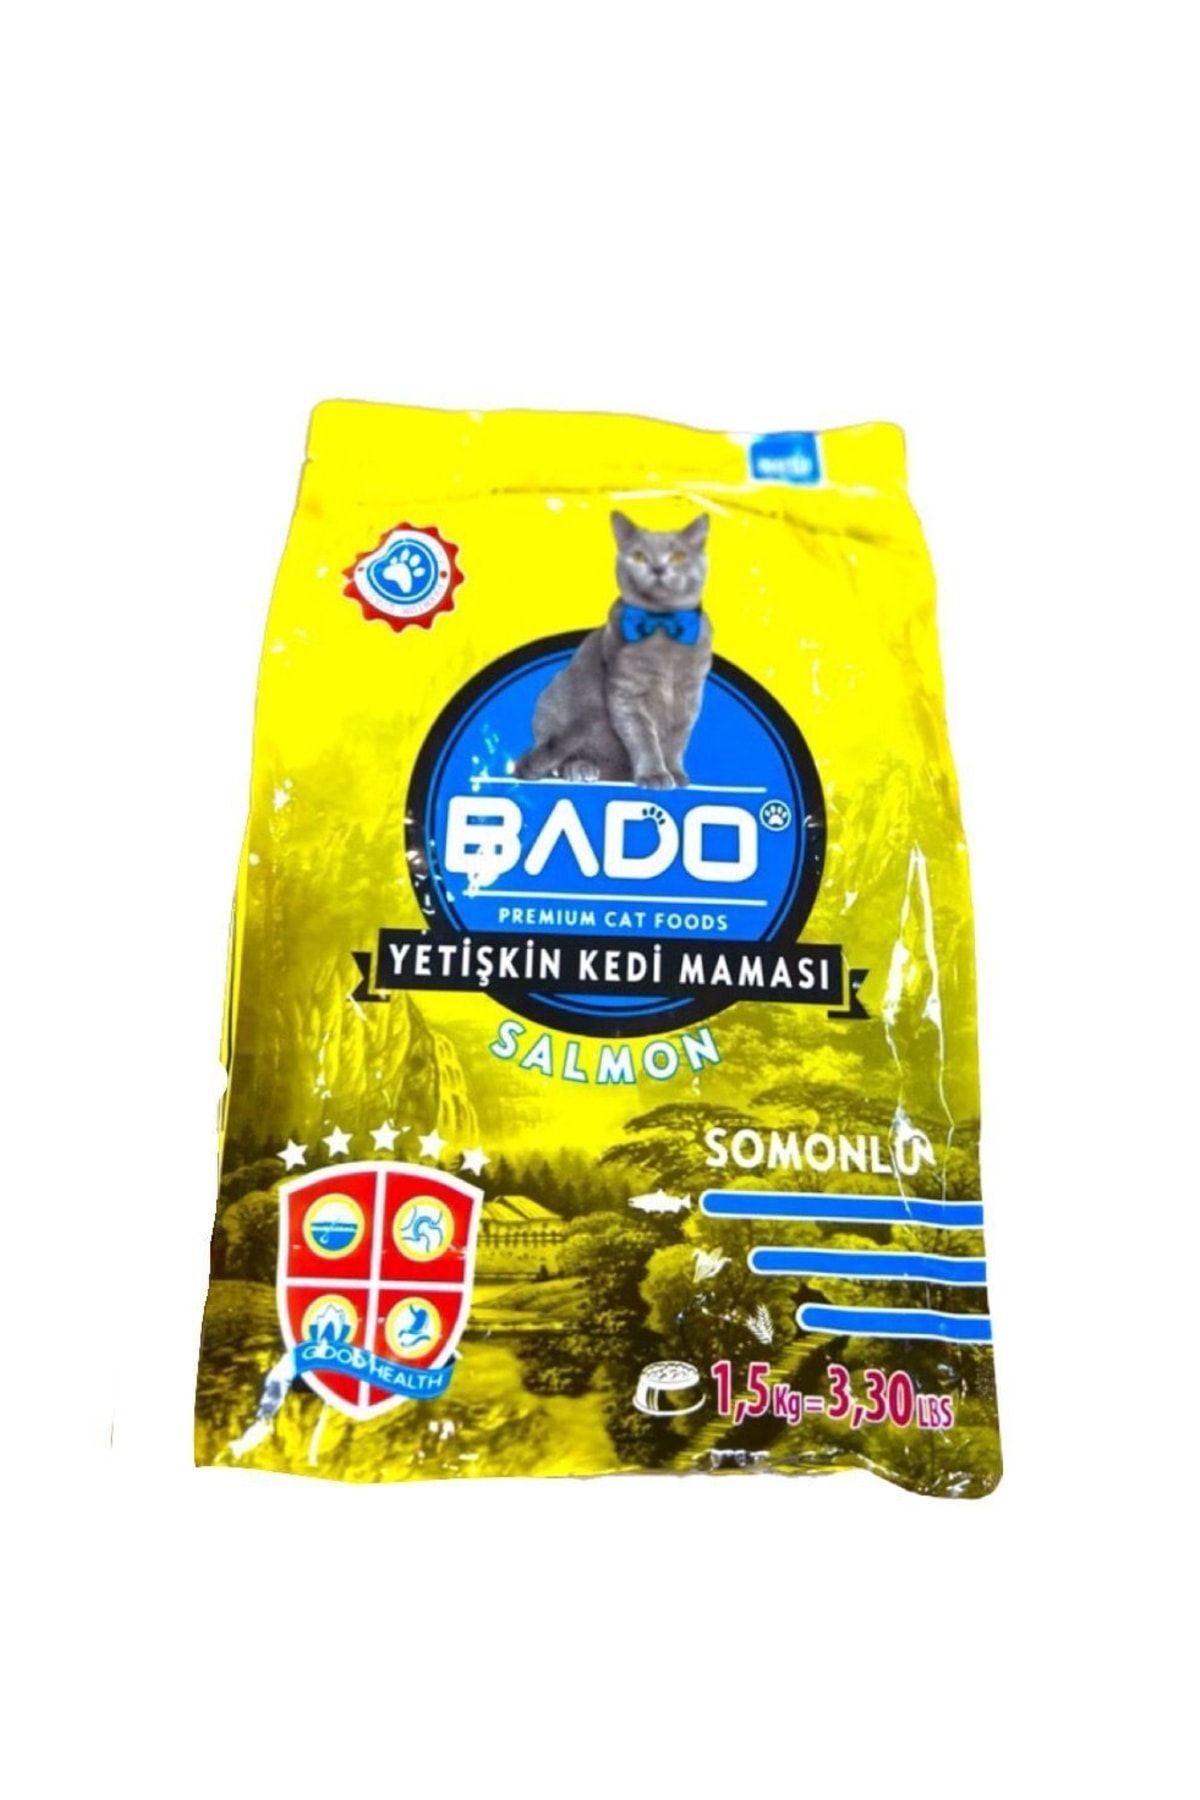 Bado Somonlu Yetişkin Kedi Maması 1500 gr